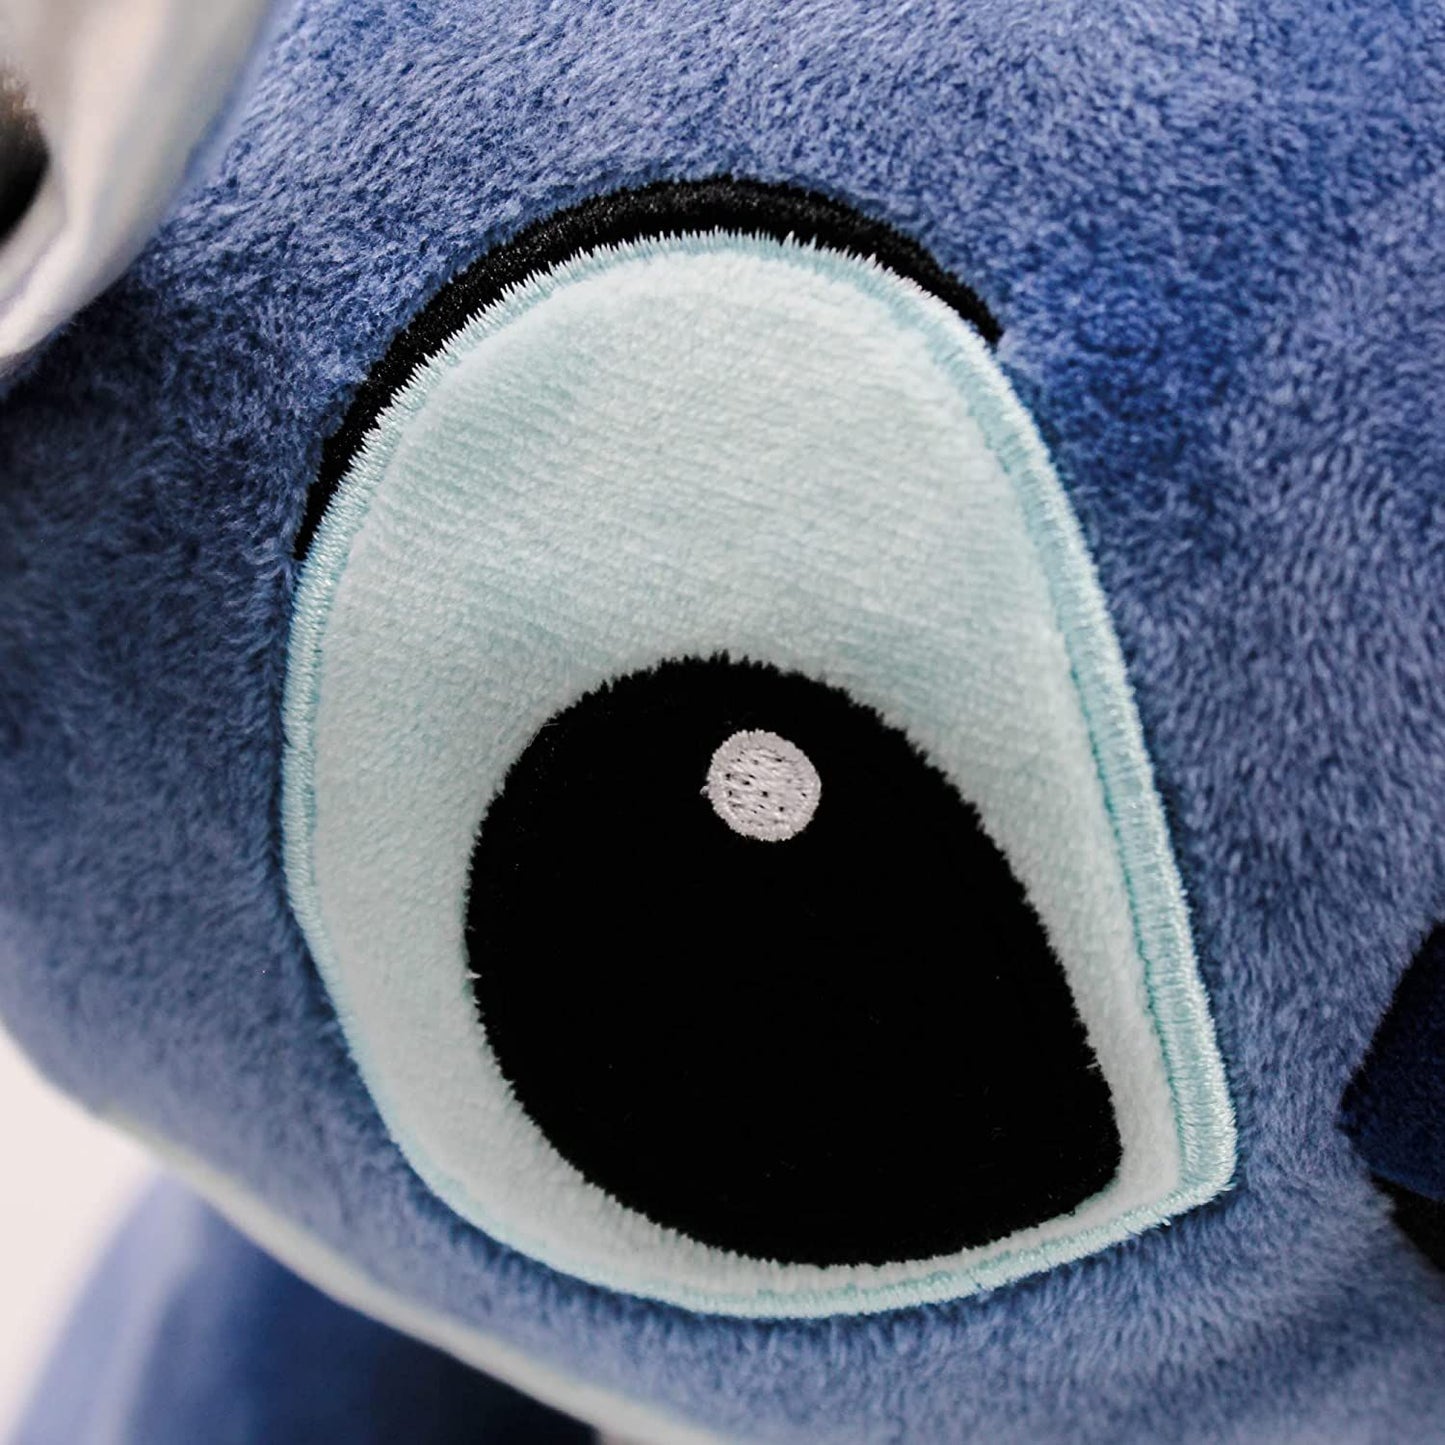 Disney - 100th Celebration - Exclusive Stitch 14In Plush Toy - Heretoserveyou